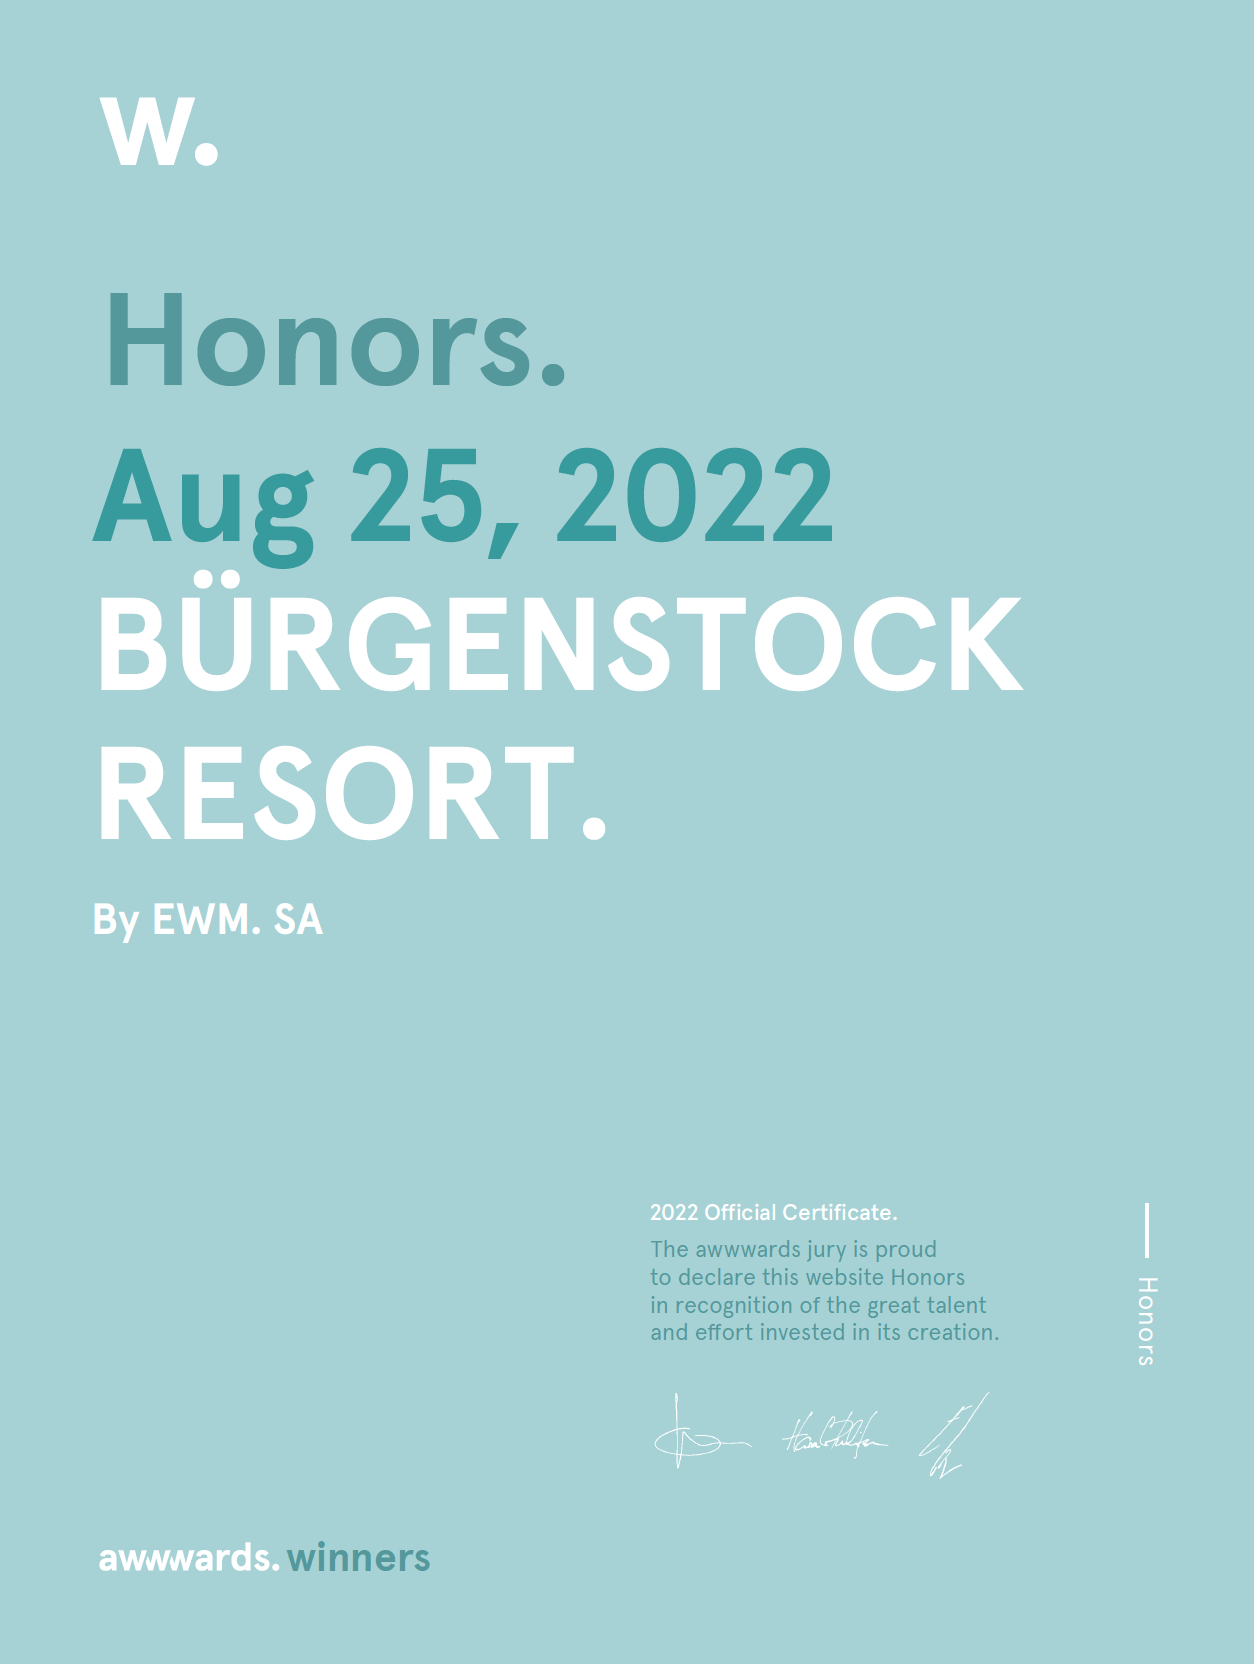 Burgenstock resort award certificate